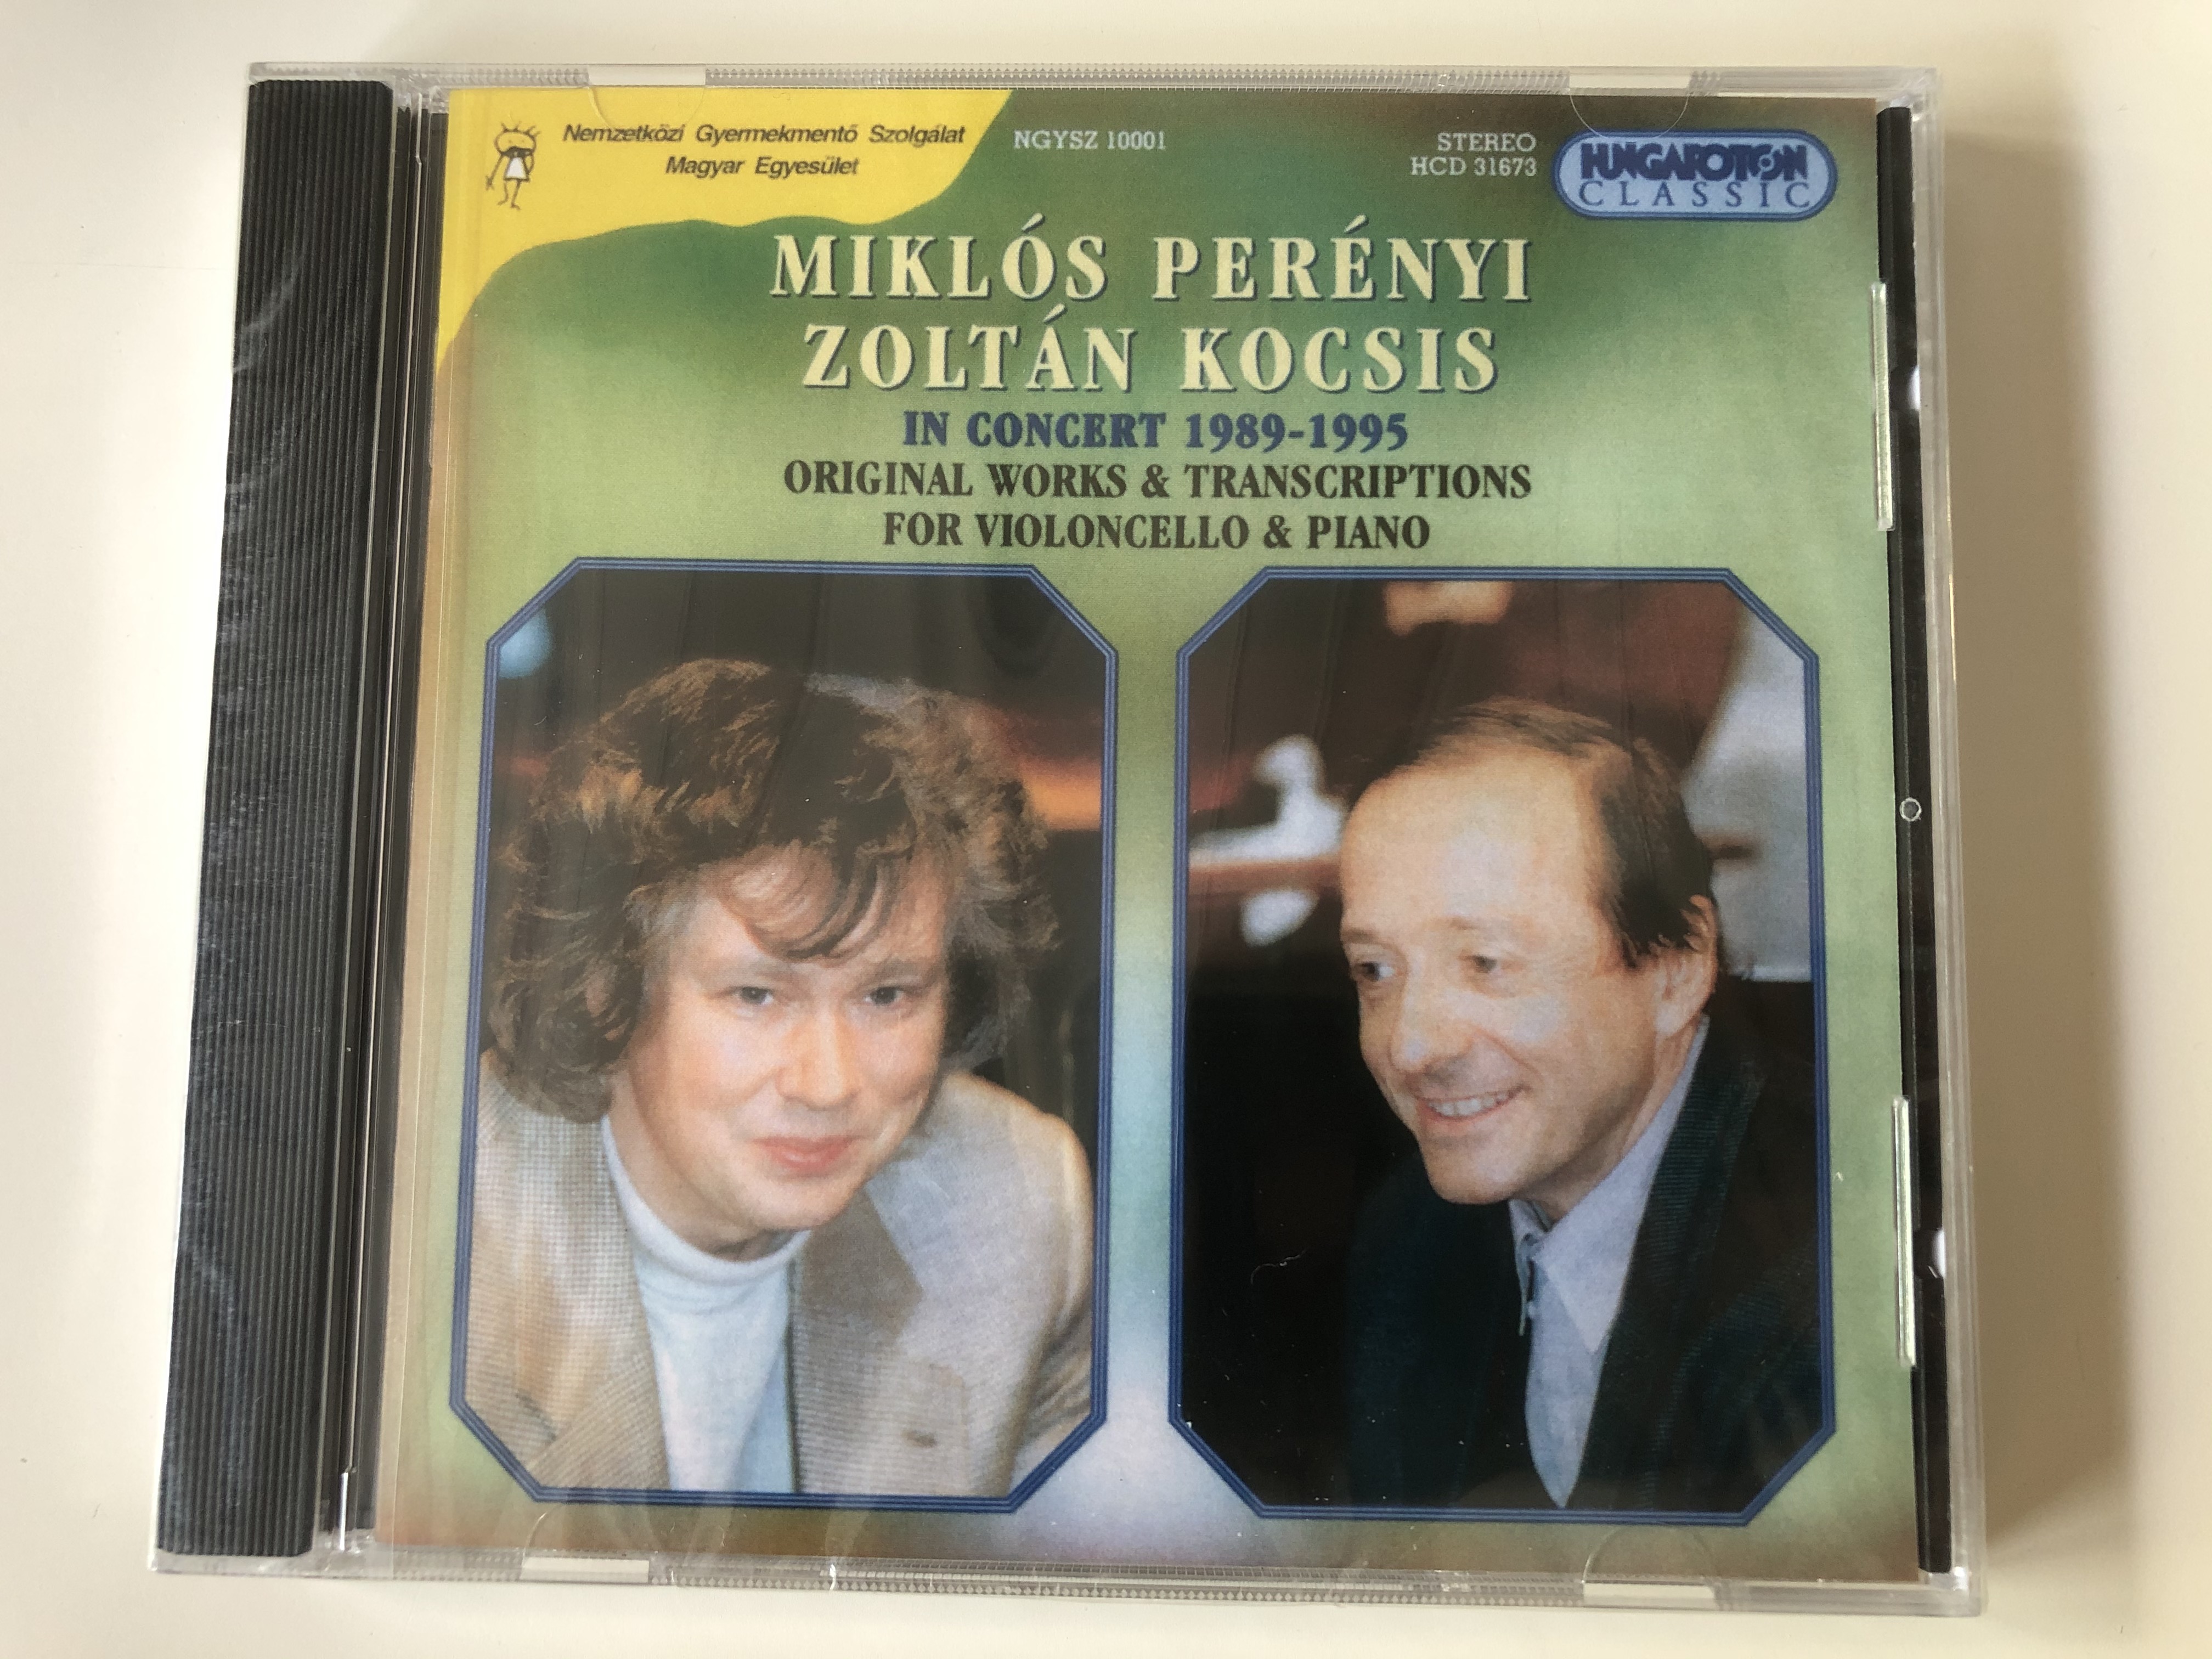 miklos-perenyi-zoltan-kocsis-in-concert-1989-1995-original-works-transcriptions-for-violoncello-piano-hungaroton-classic-audio-cd-1996-stereo-5991813167323-1-.jpg